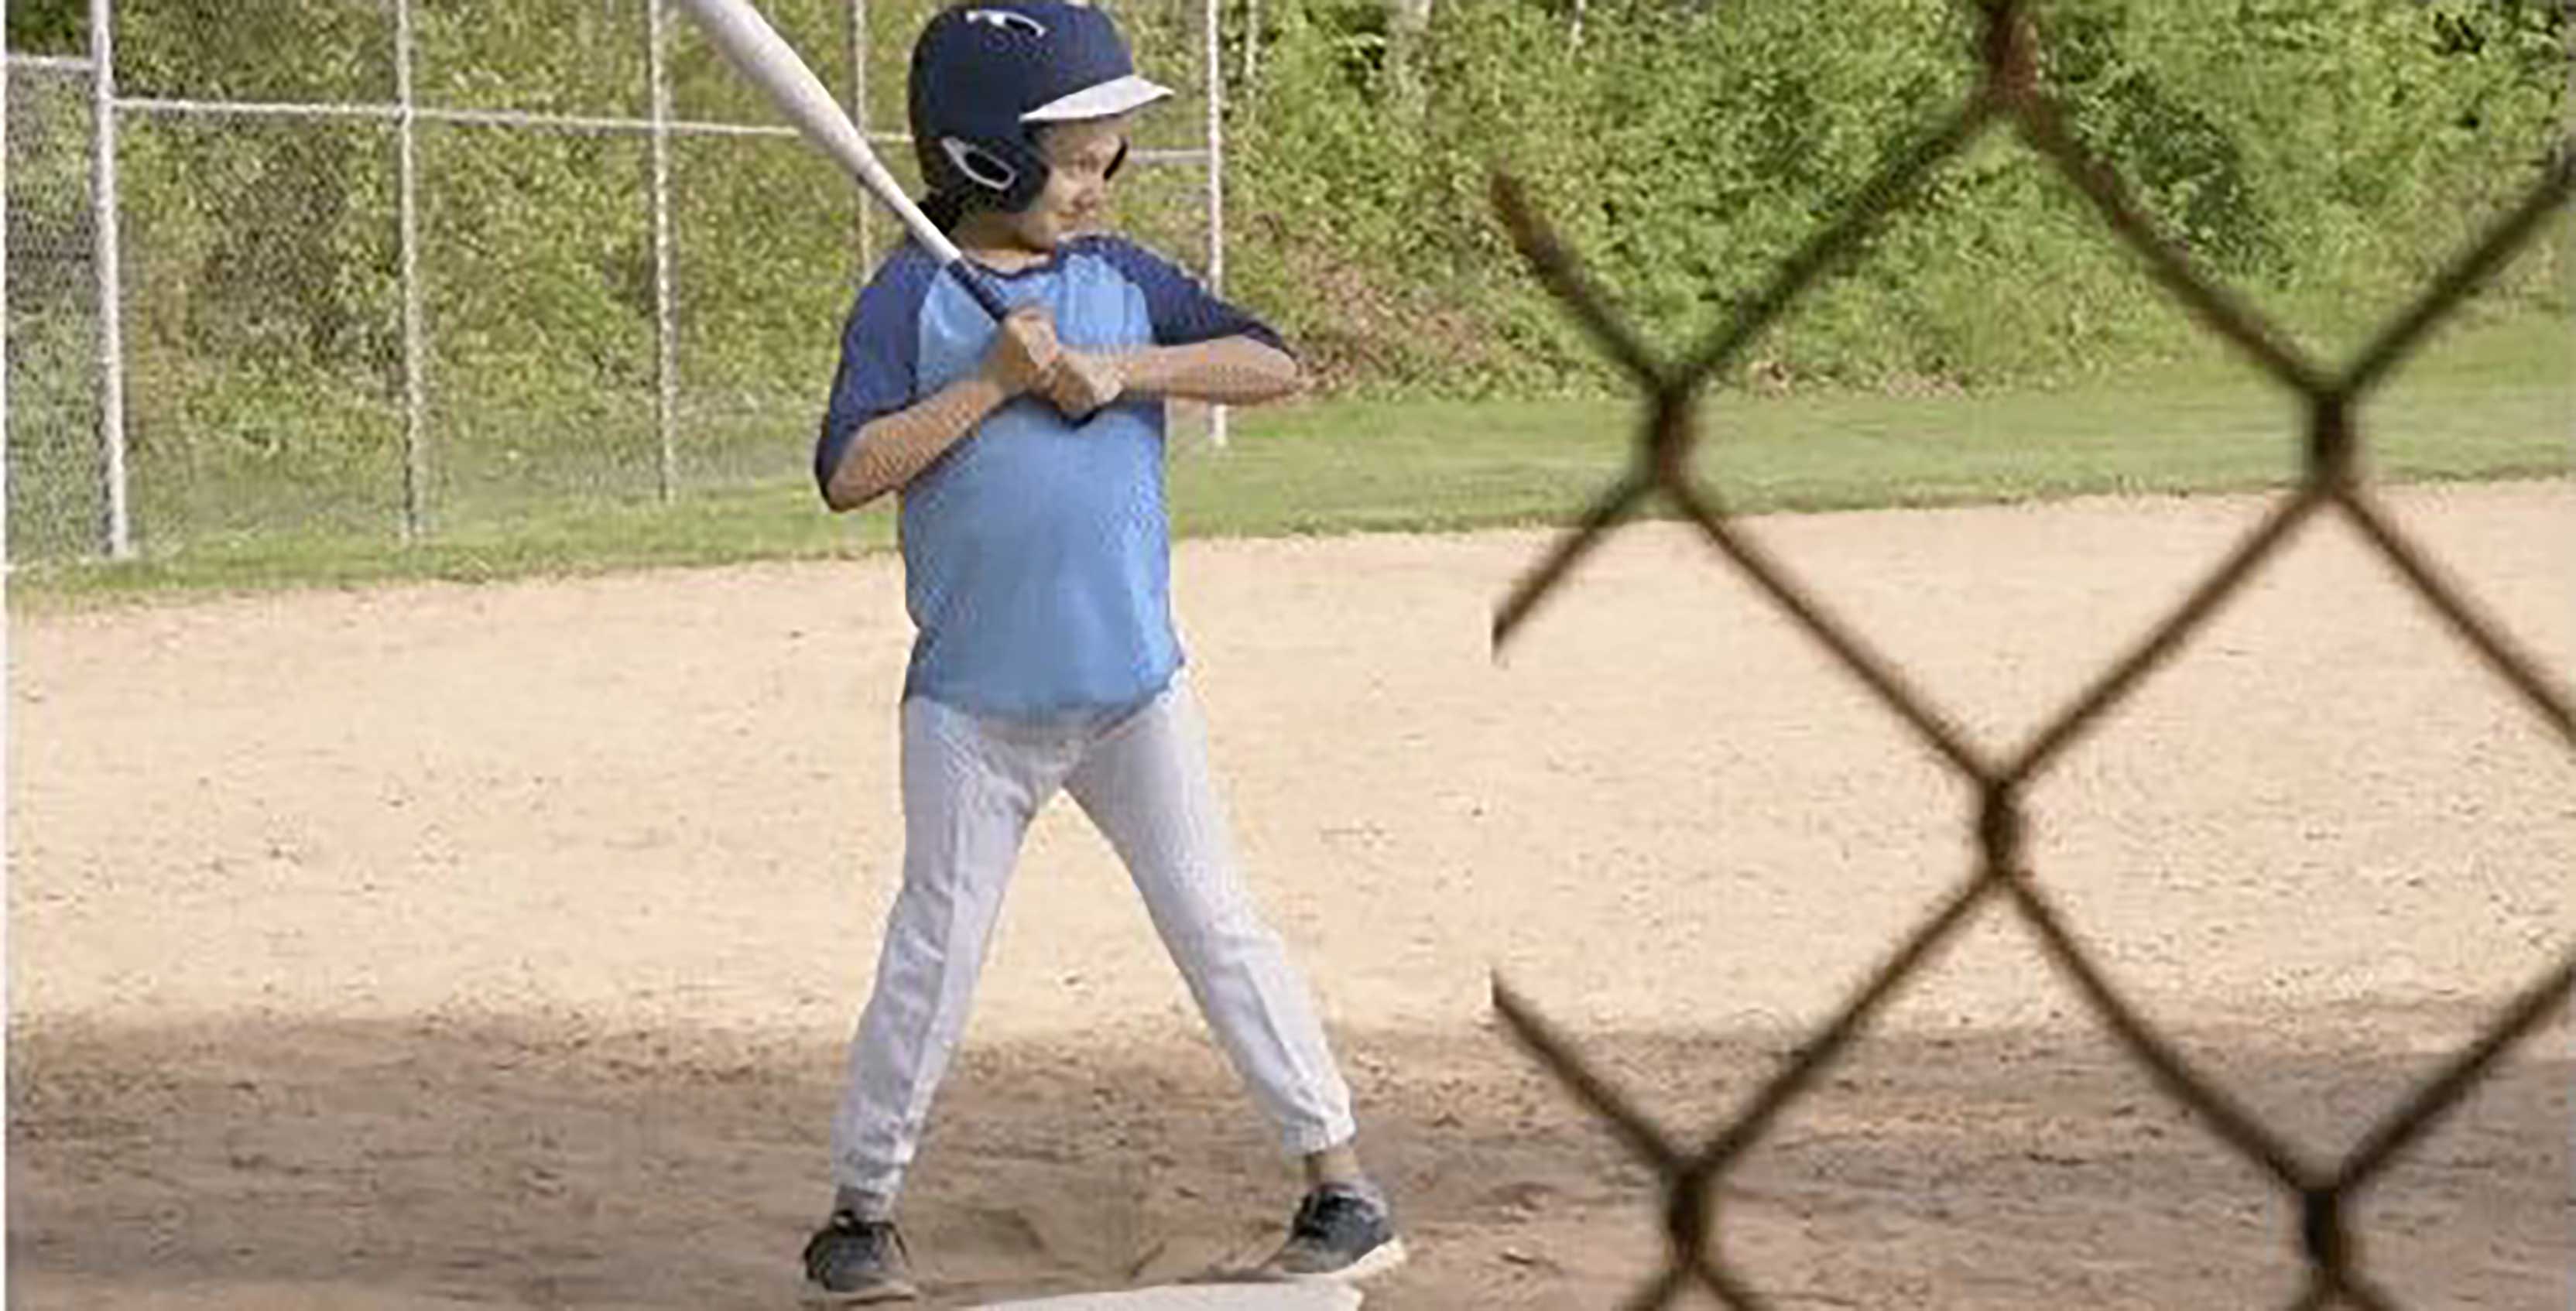 Google baseball kid